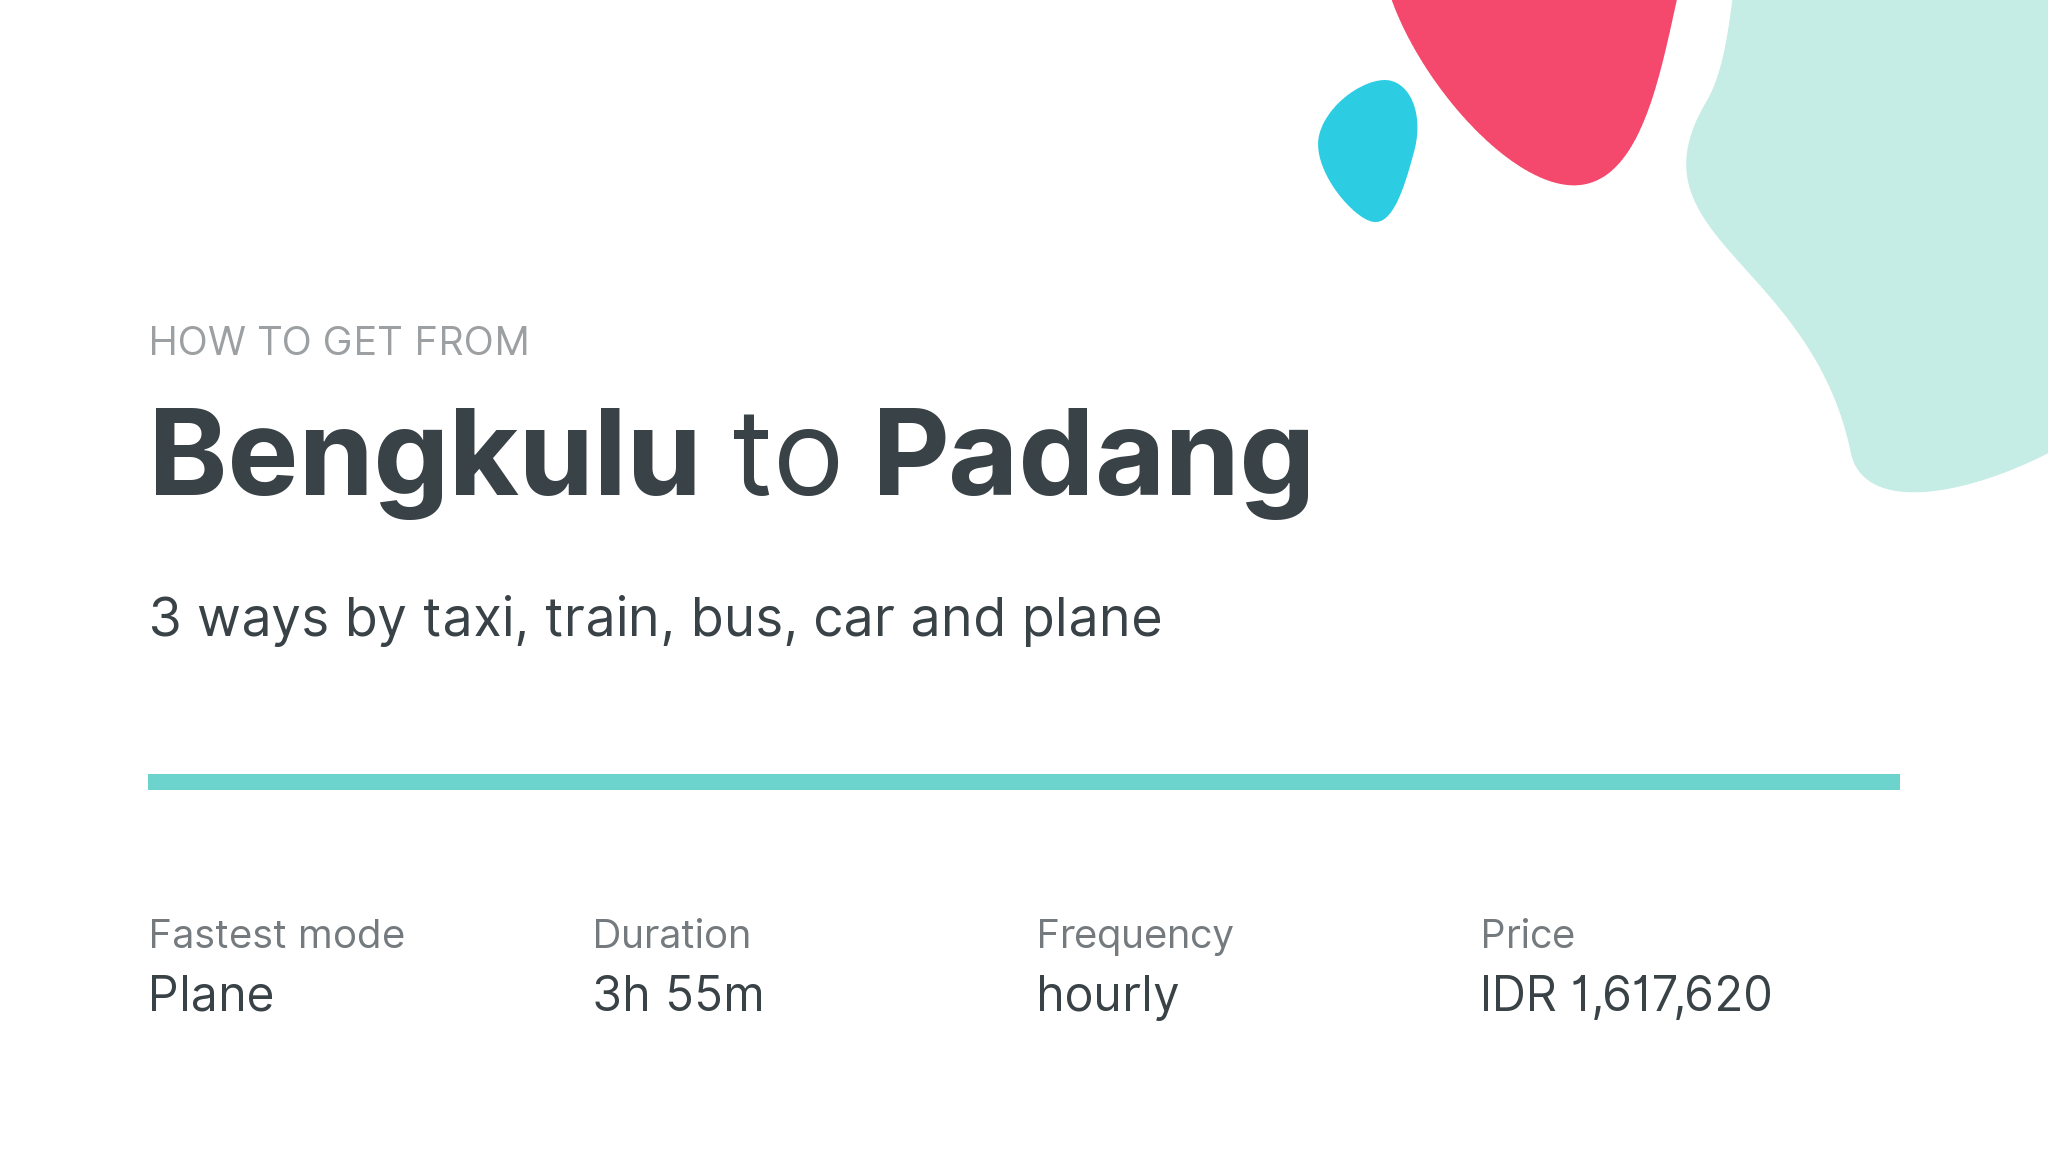 How do I get from Bengkulu to Padang